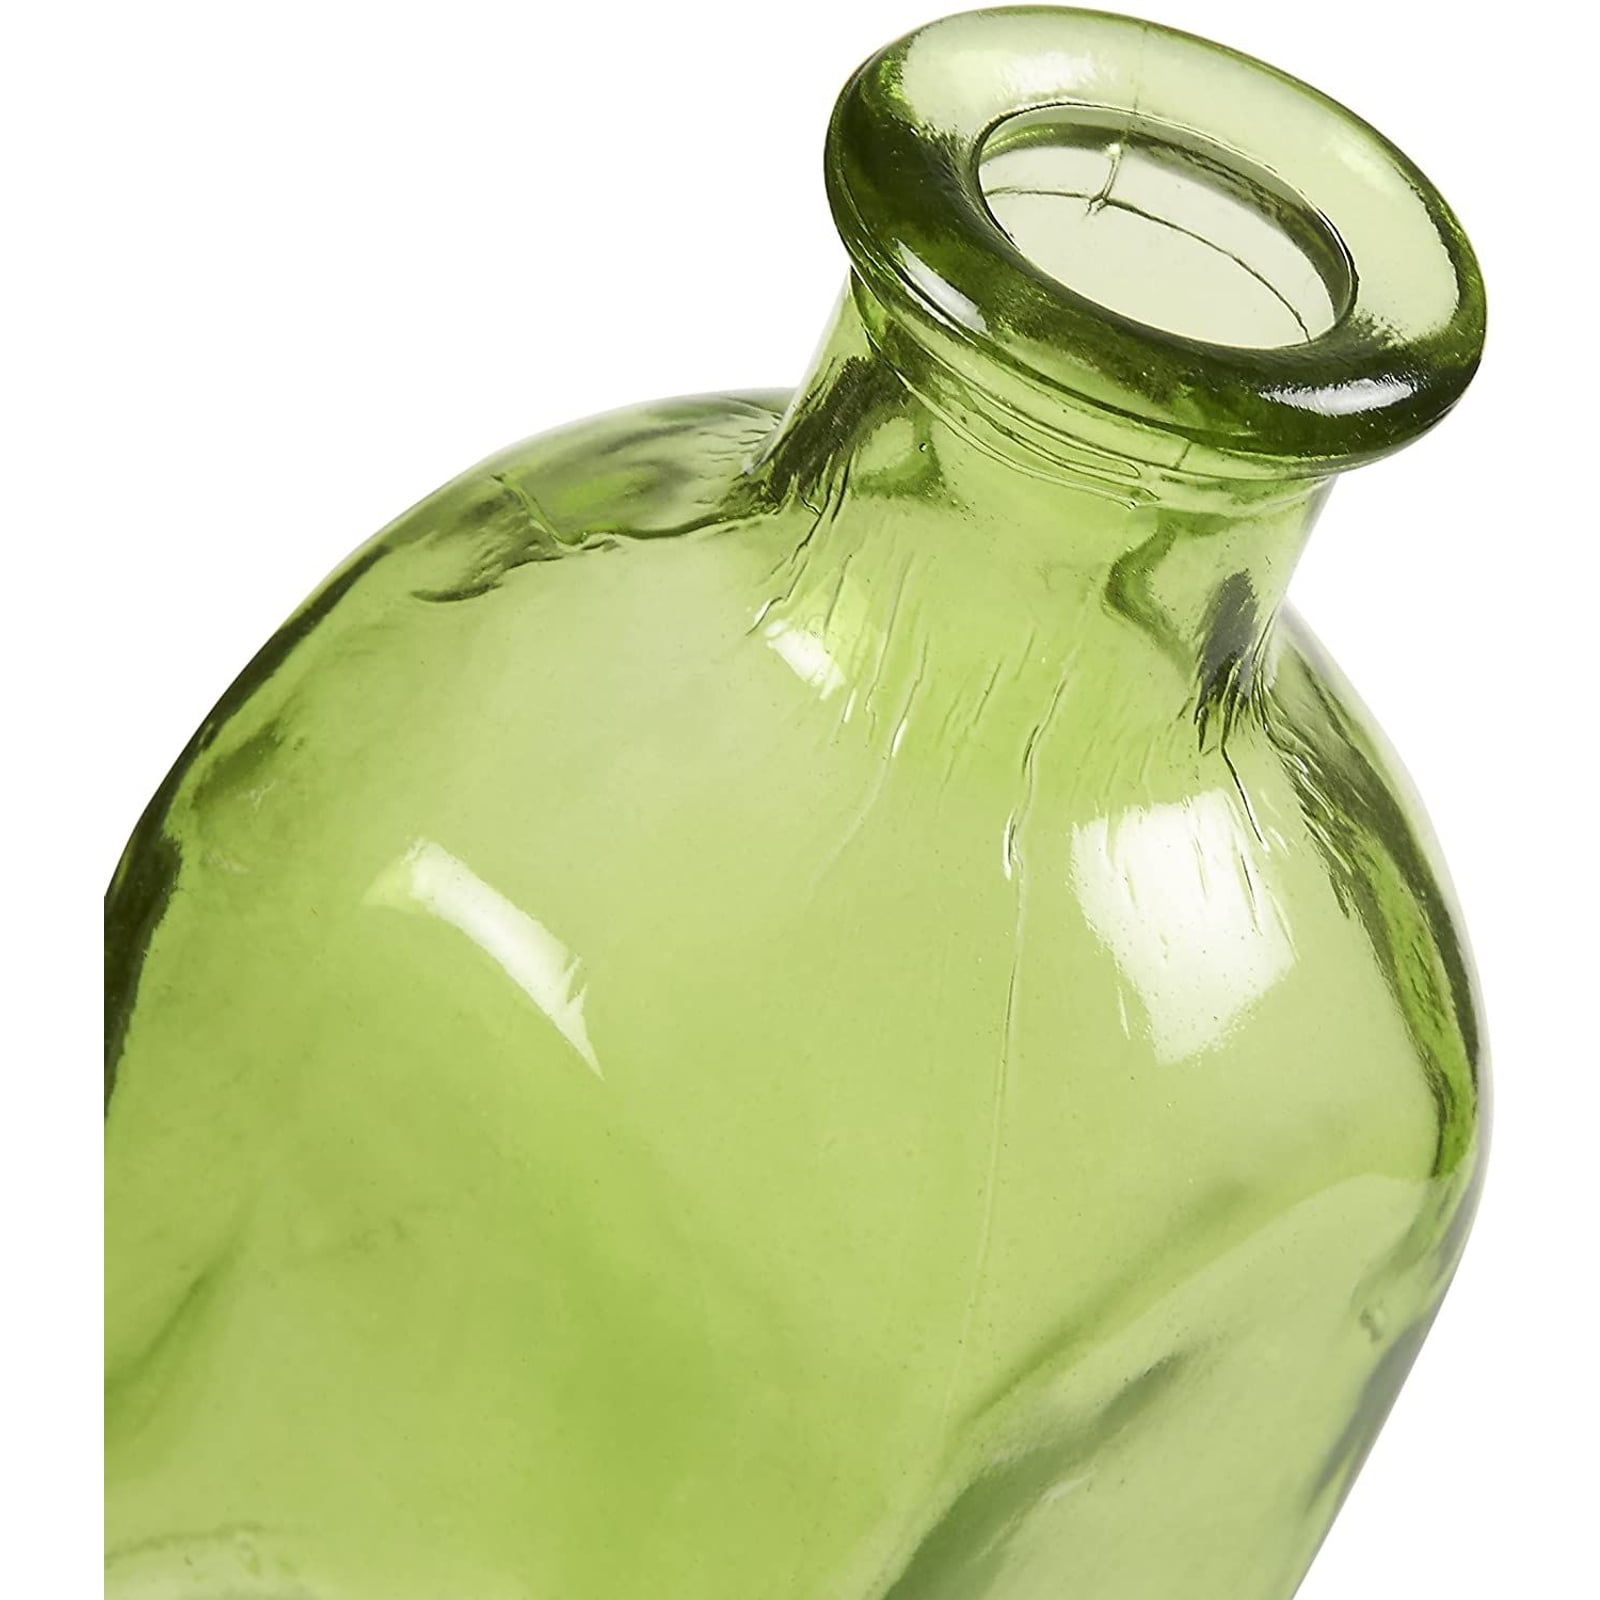 1pc 5/8/10/12/15/20/22/25/30ml Clear Glass Bottles with Cork Stopper Empty  Spice Bottles Jars DIY Crafts Vials Refillable Bottle - AliExpress